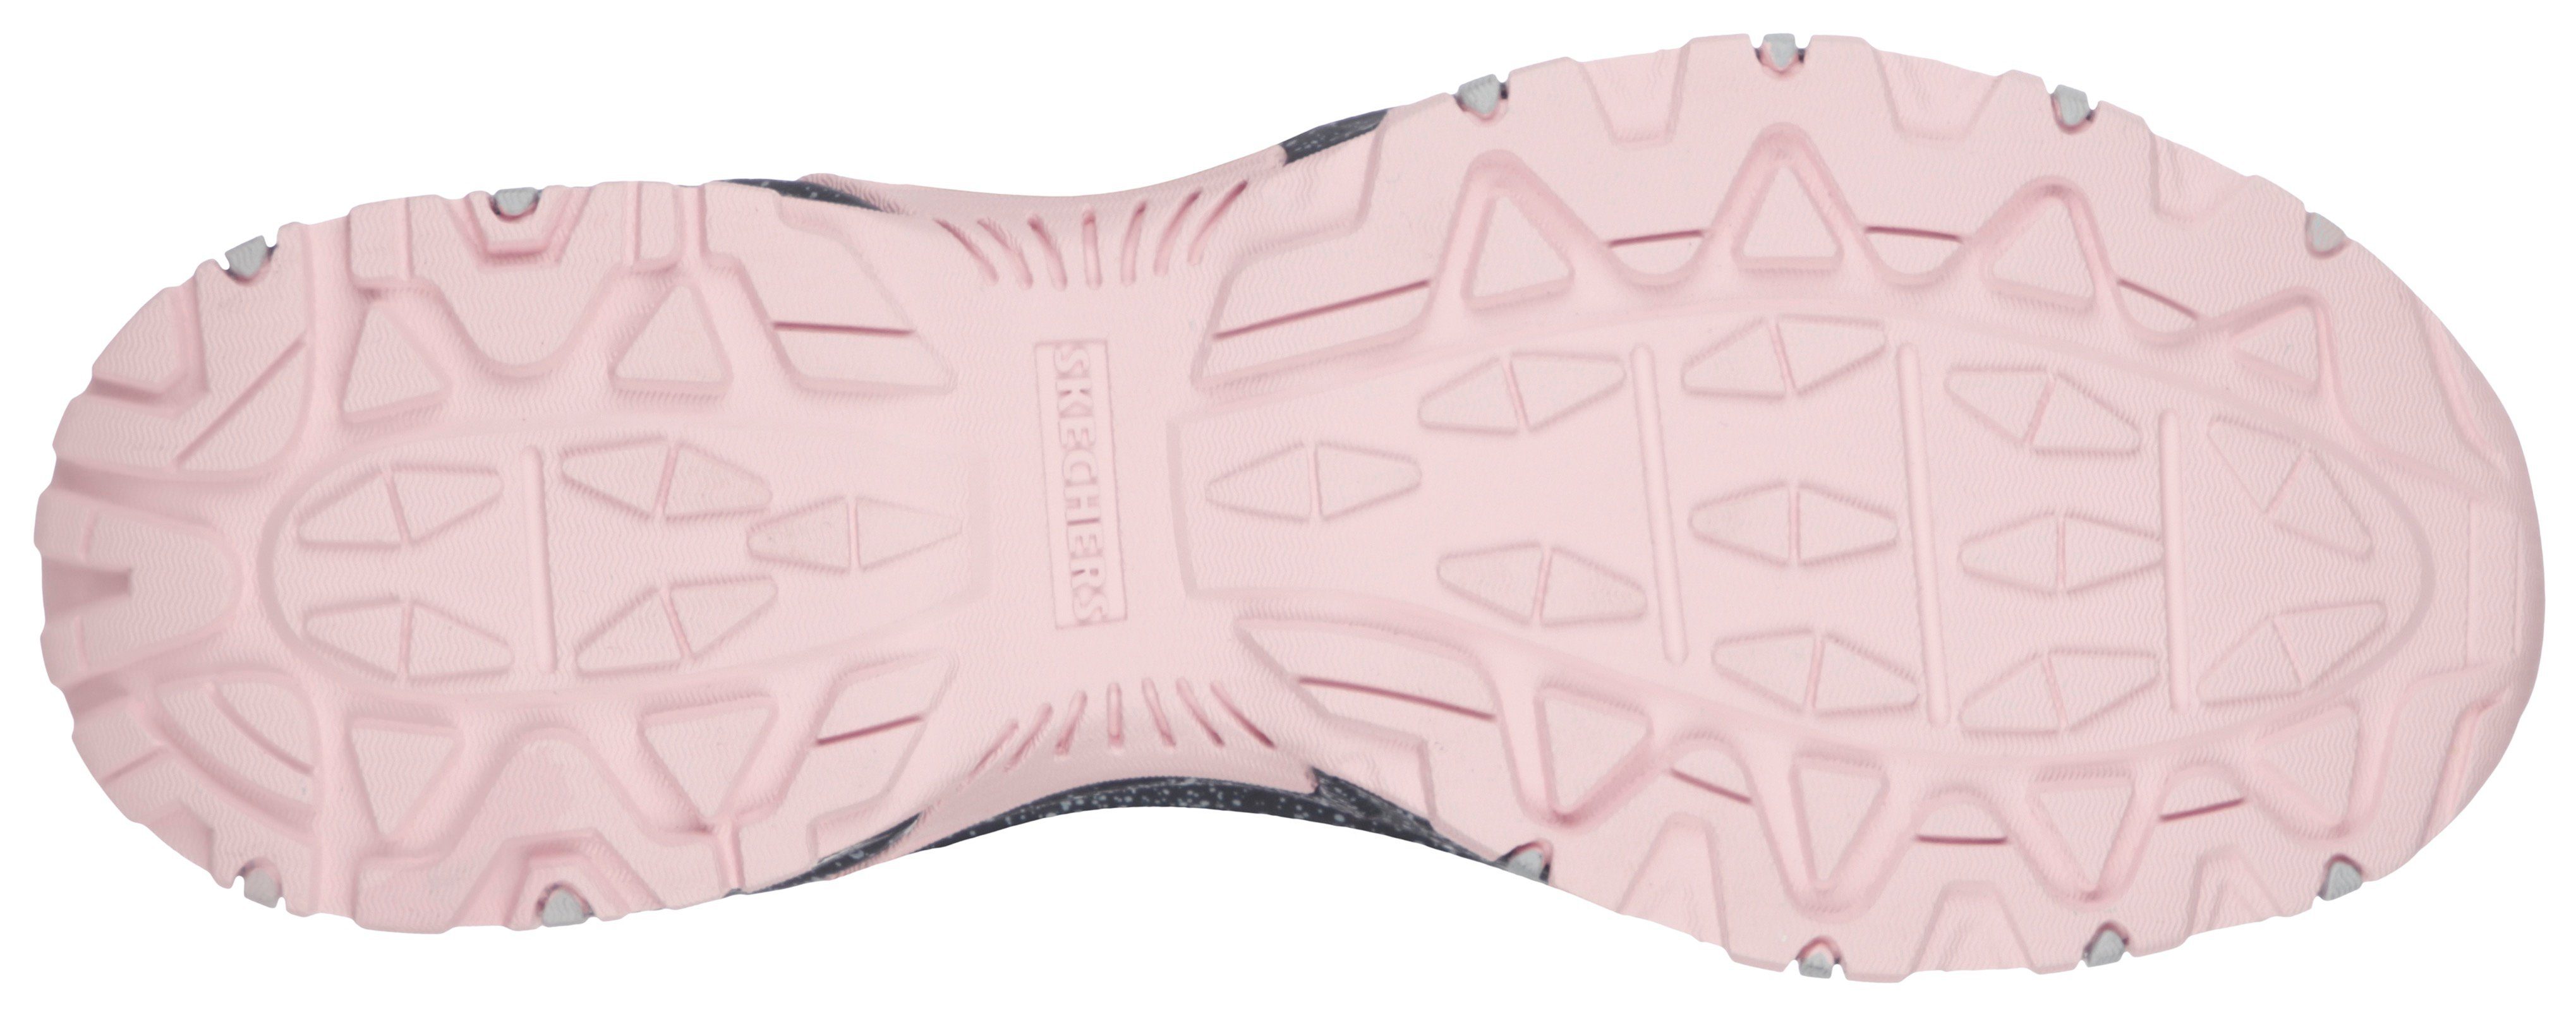 Sneaker HILLCREST ESCAPADE grau-pink Skechers Materialmix PURE im